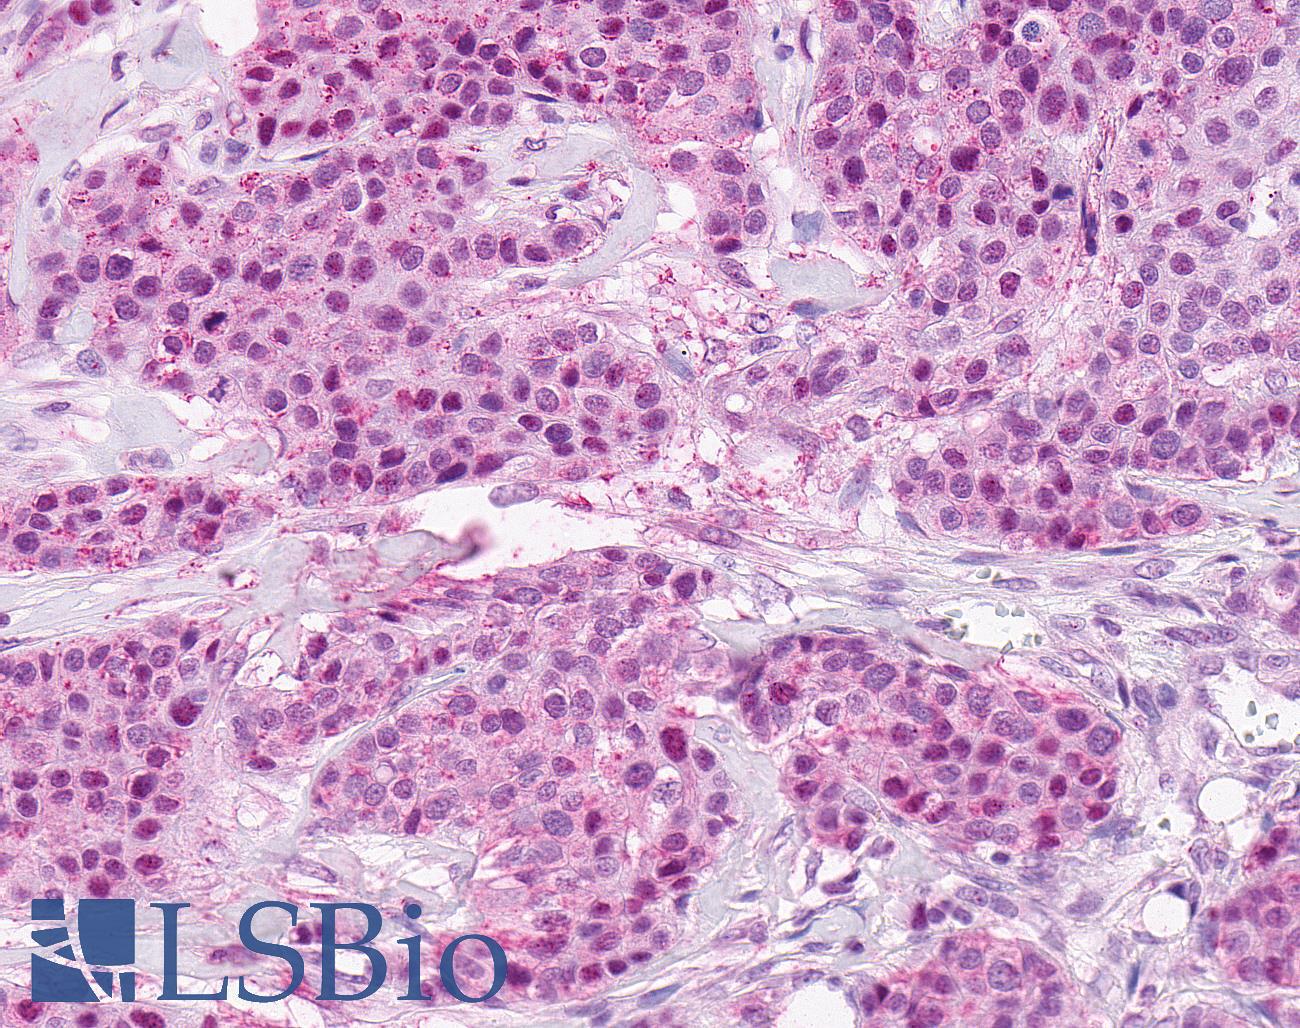 SSTR4 Antibody - Breast, Carcinoma